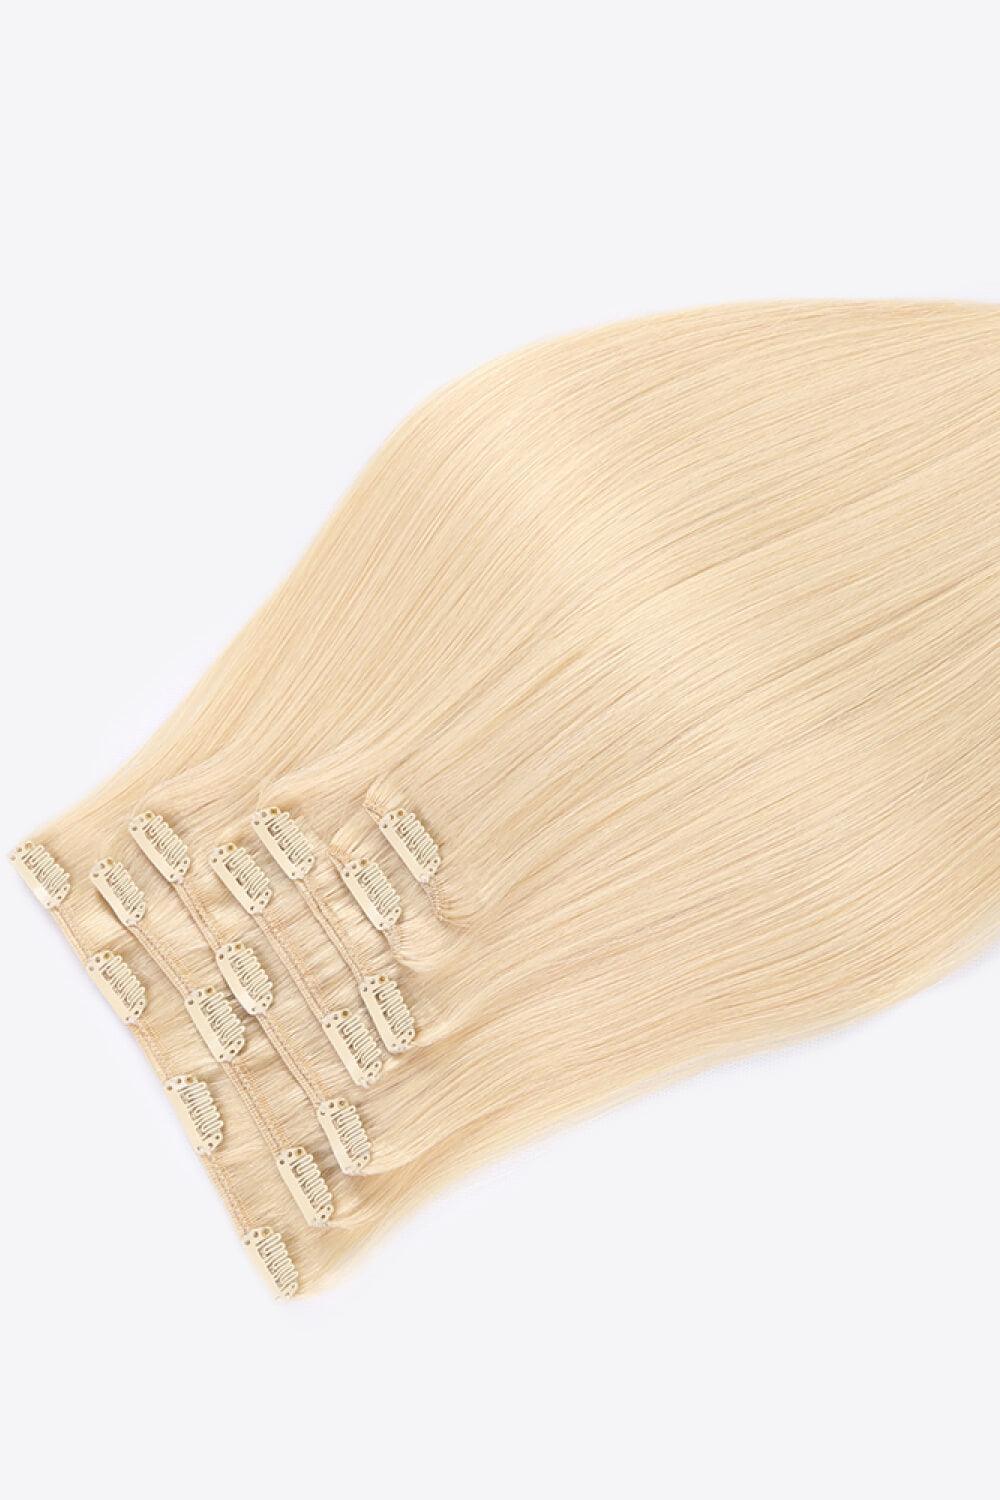 Clip-in Blonde Indian Human Hair Extension 20" - MXSTUDIO.COM